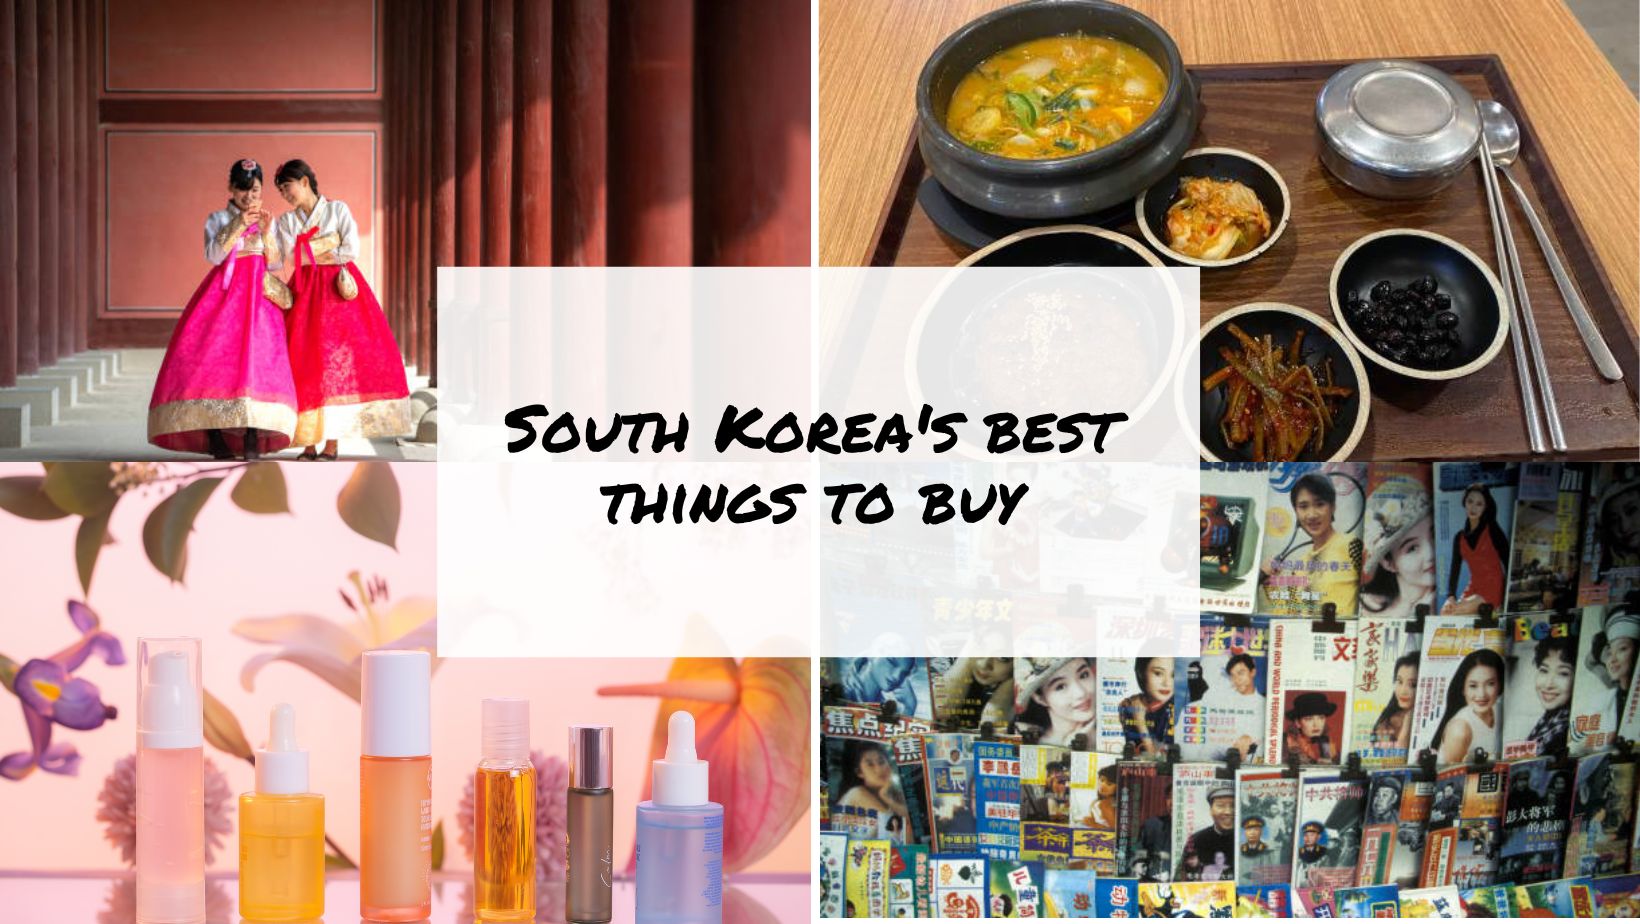 South Korea's best things to buy